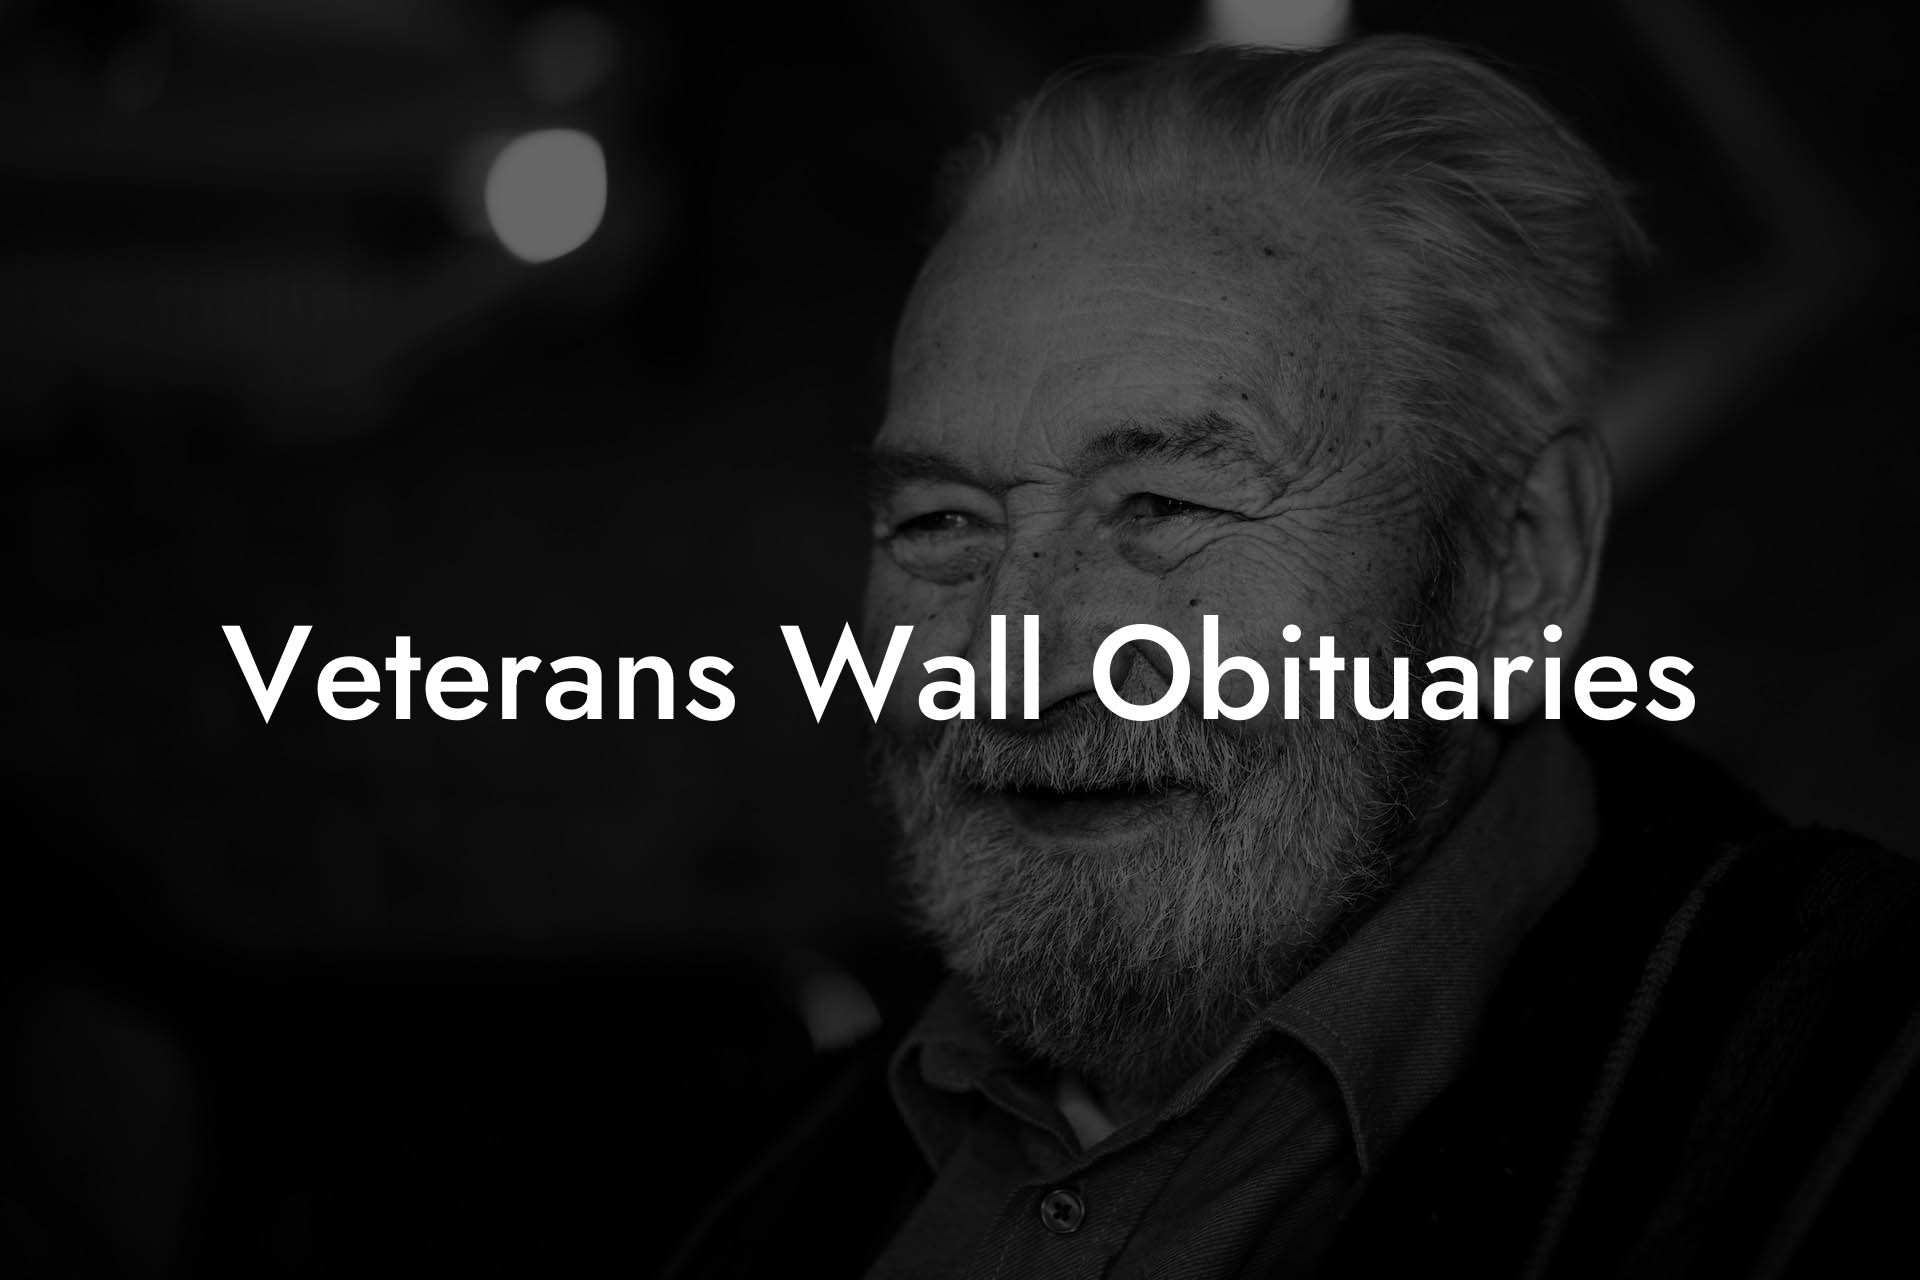 Veterans Wall Obituaries